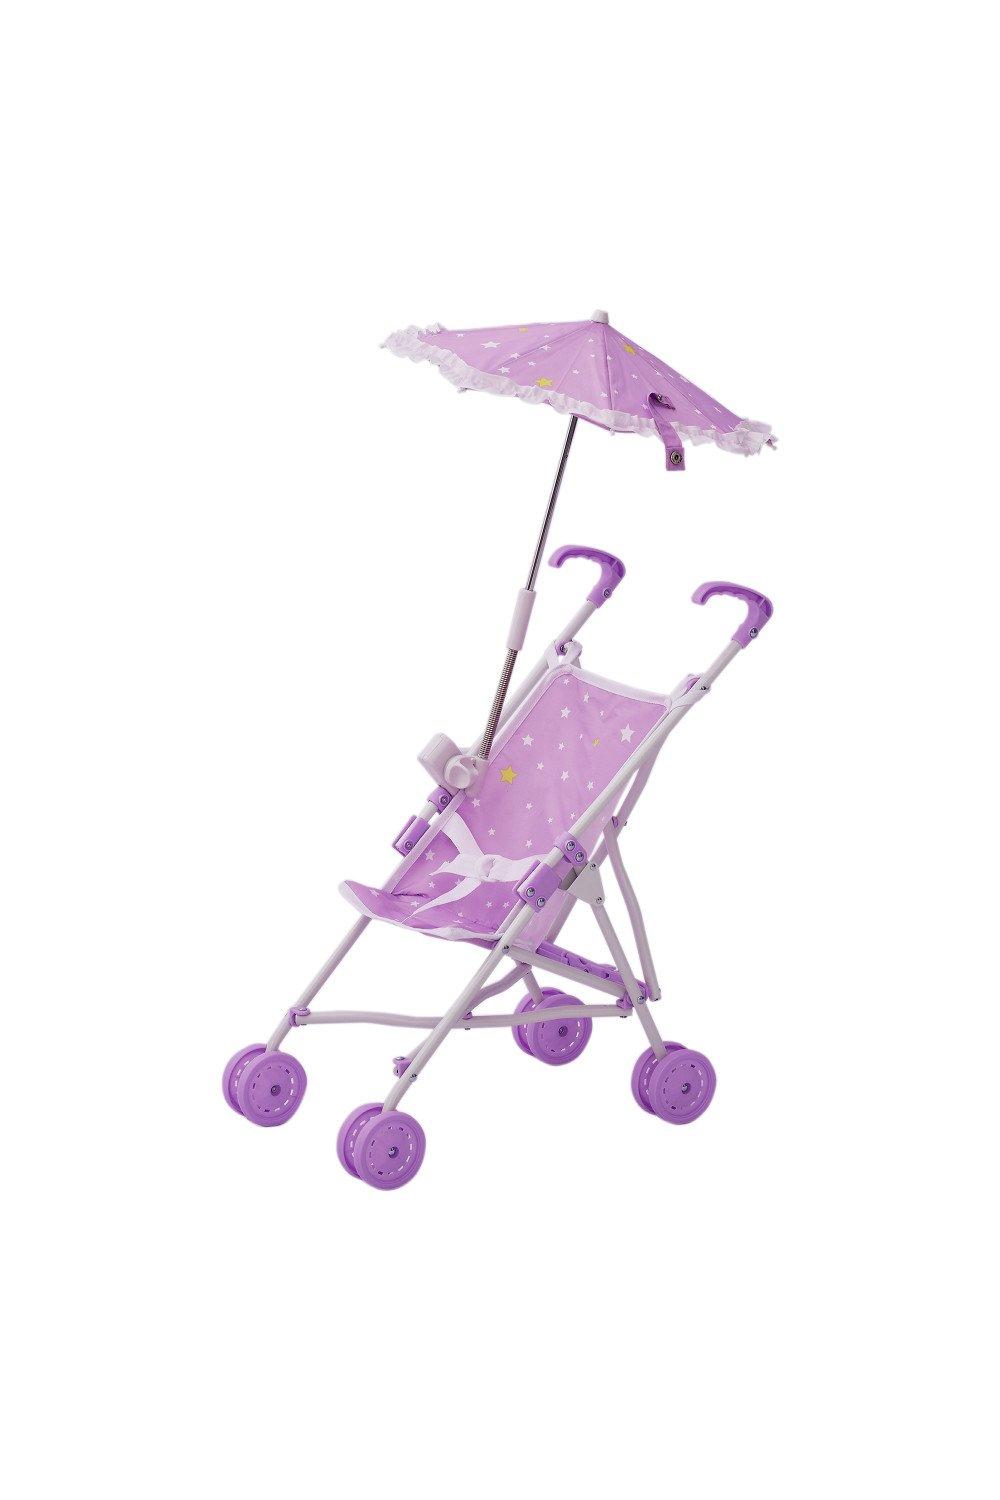 Olivia’s Little World Classic Baby Doll Stroller